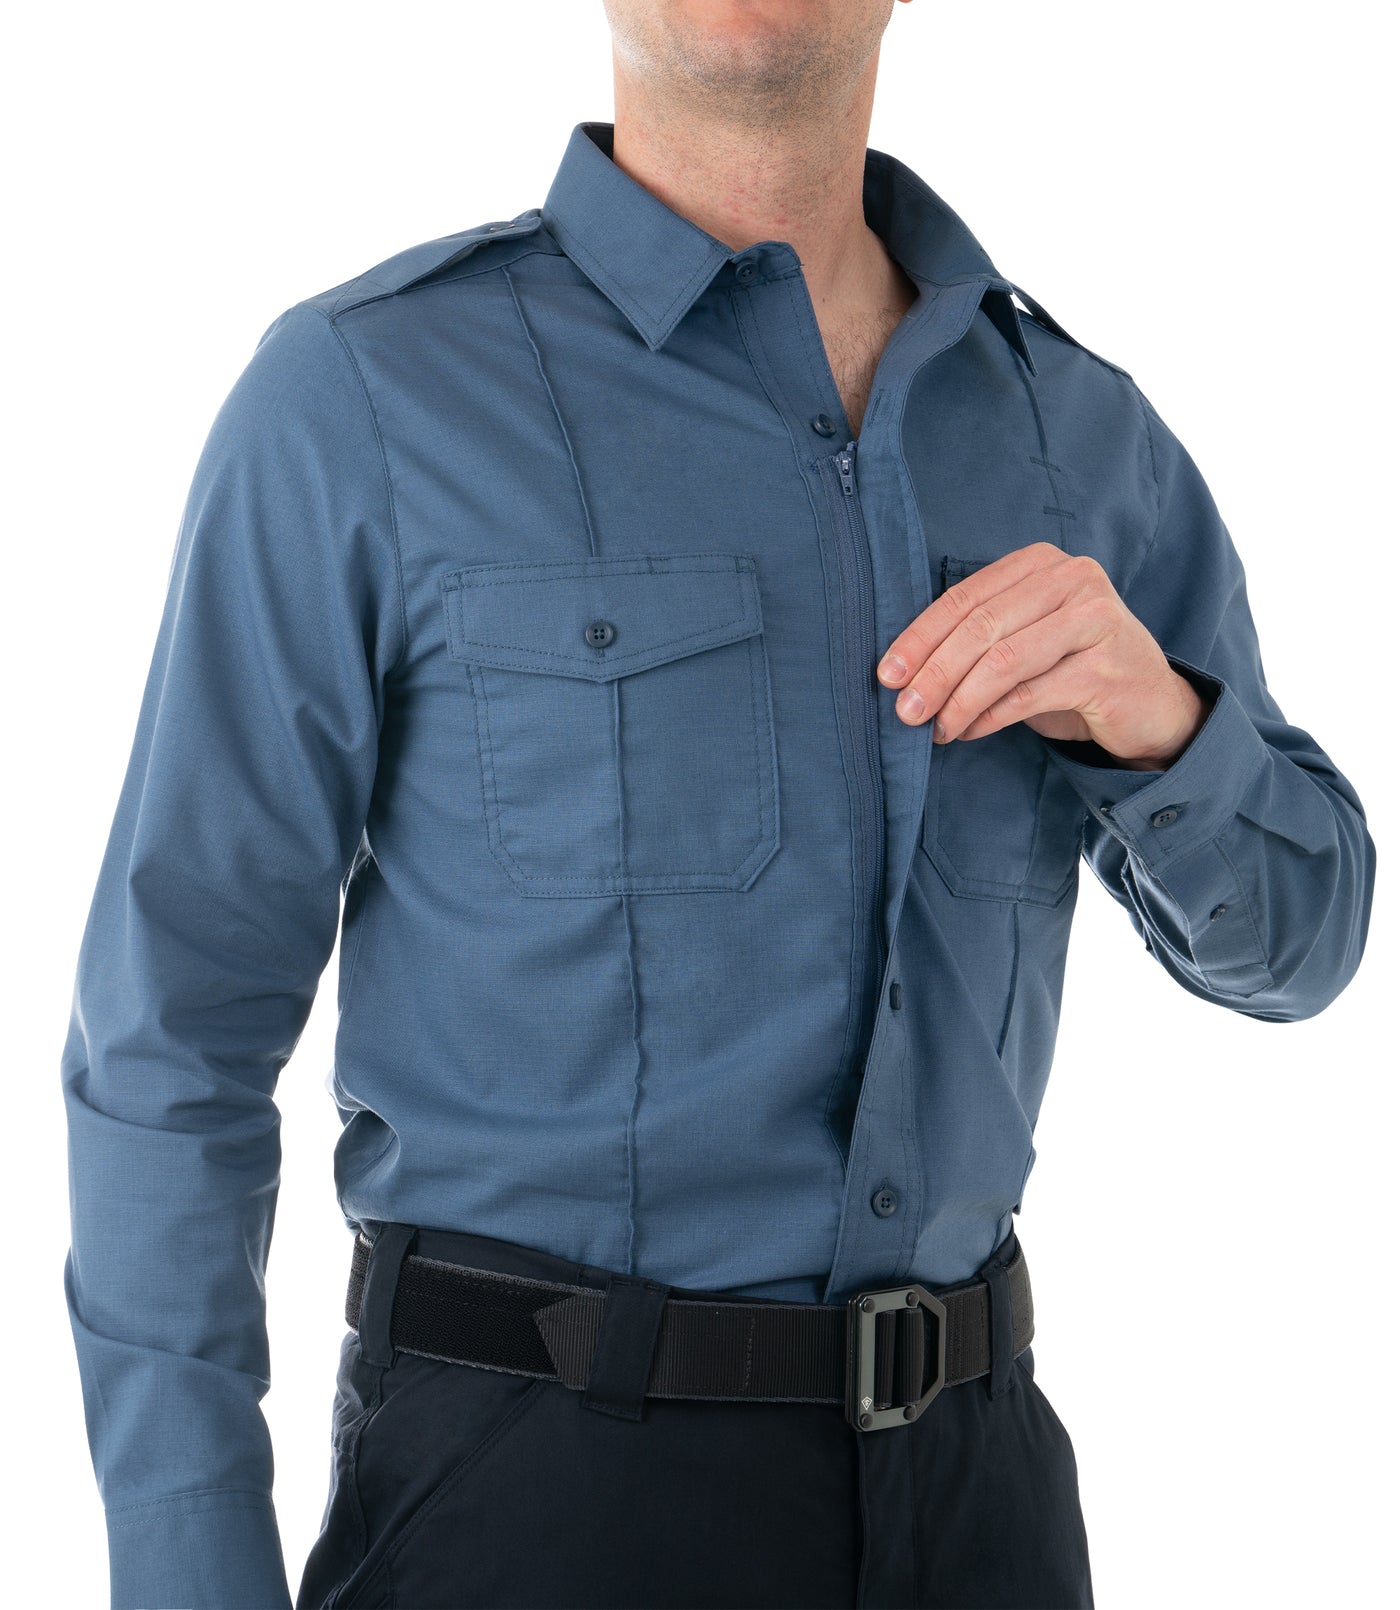 Men's Pro Duty Uniform Shirt / French Blue